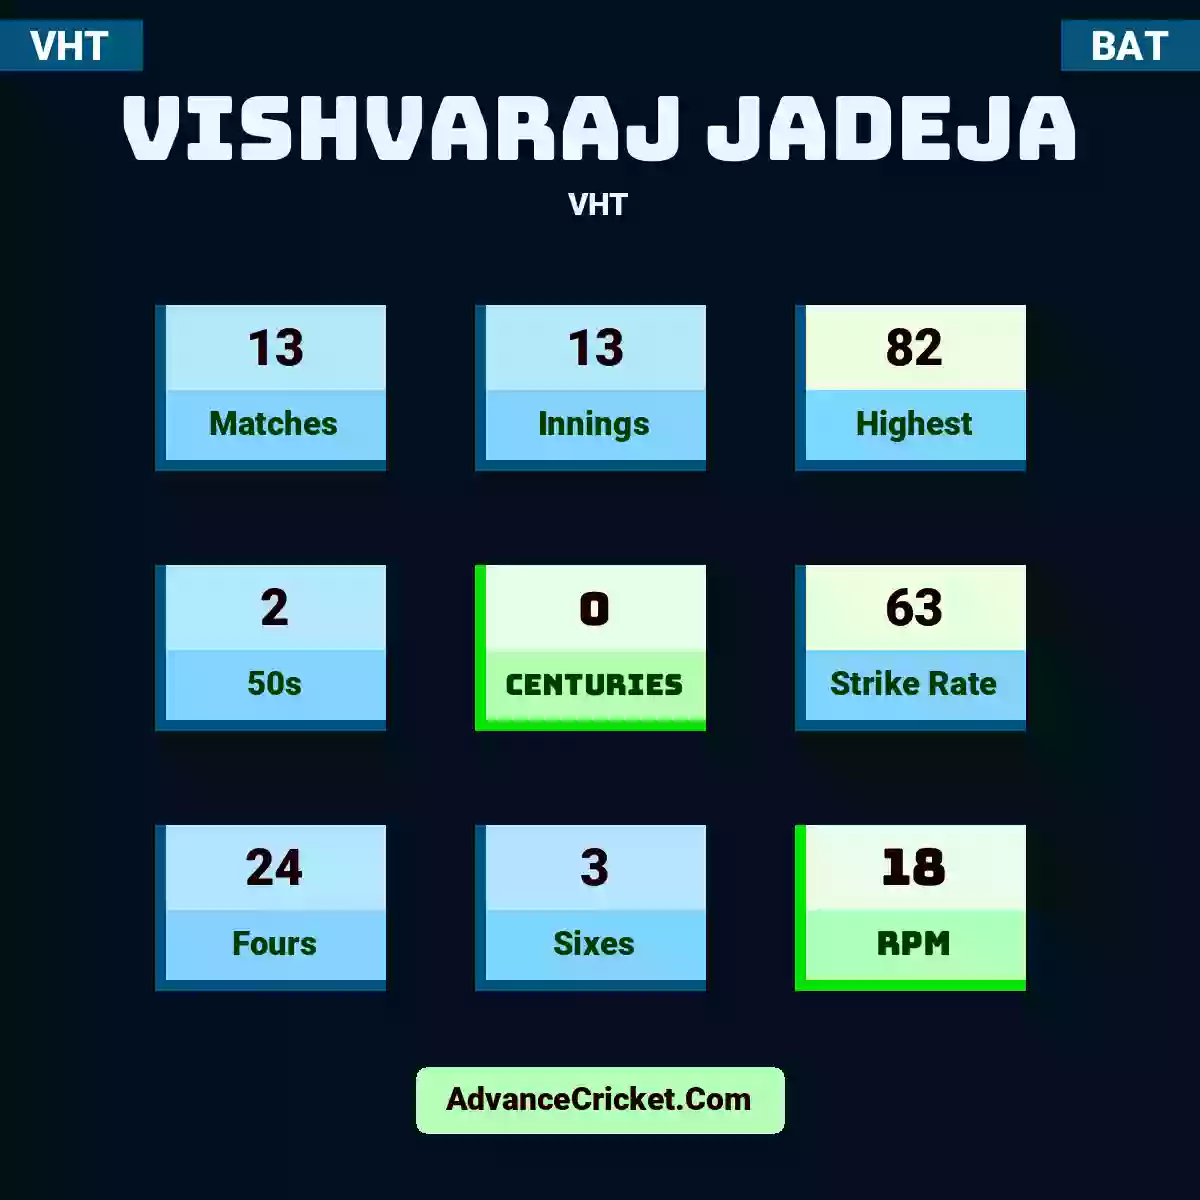 Vishvaraj Jadeja VHT , Vishvaraj Jadeja played 13 matches, scored 82 runs as highest, 2 half-centuries, and 0 centuries, with a strike rate of 63. V.Jadeja hit 24 fours and 3 sixes, with an RPM of 18.